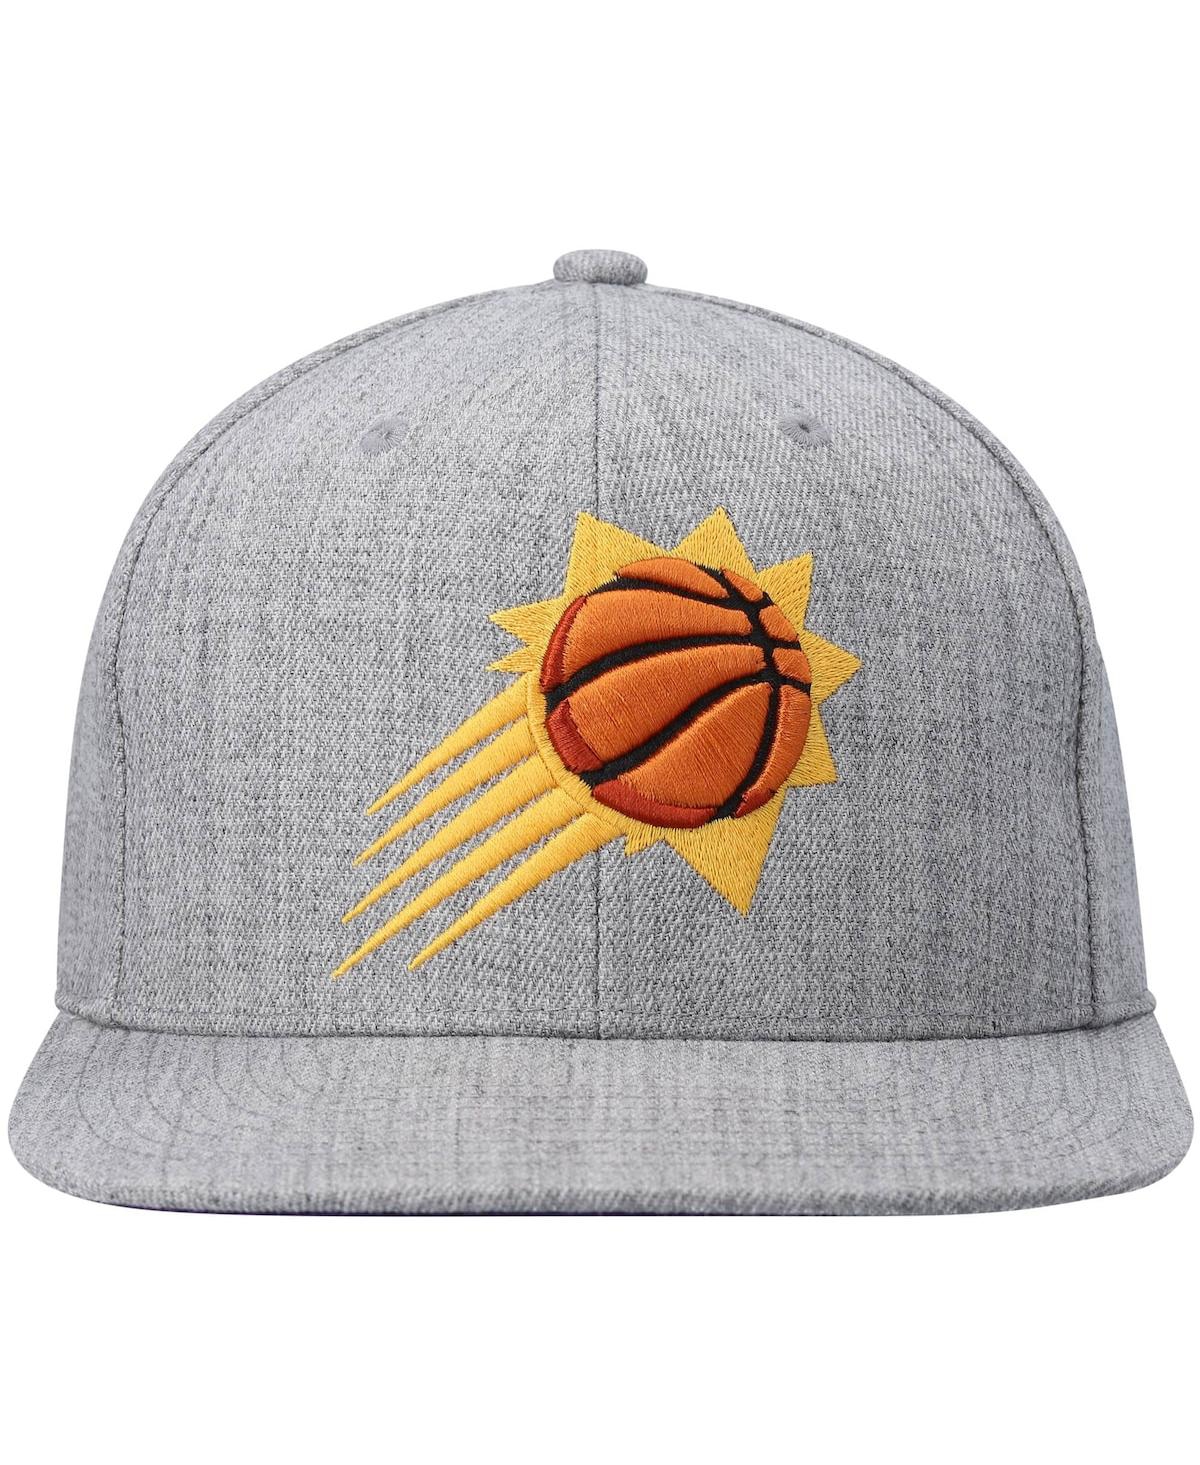 Shop Mitchell & Ness Men's  Heathered Gray Phoenix Suns 2.0 Snapback Hat